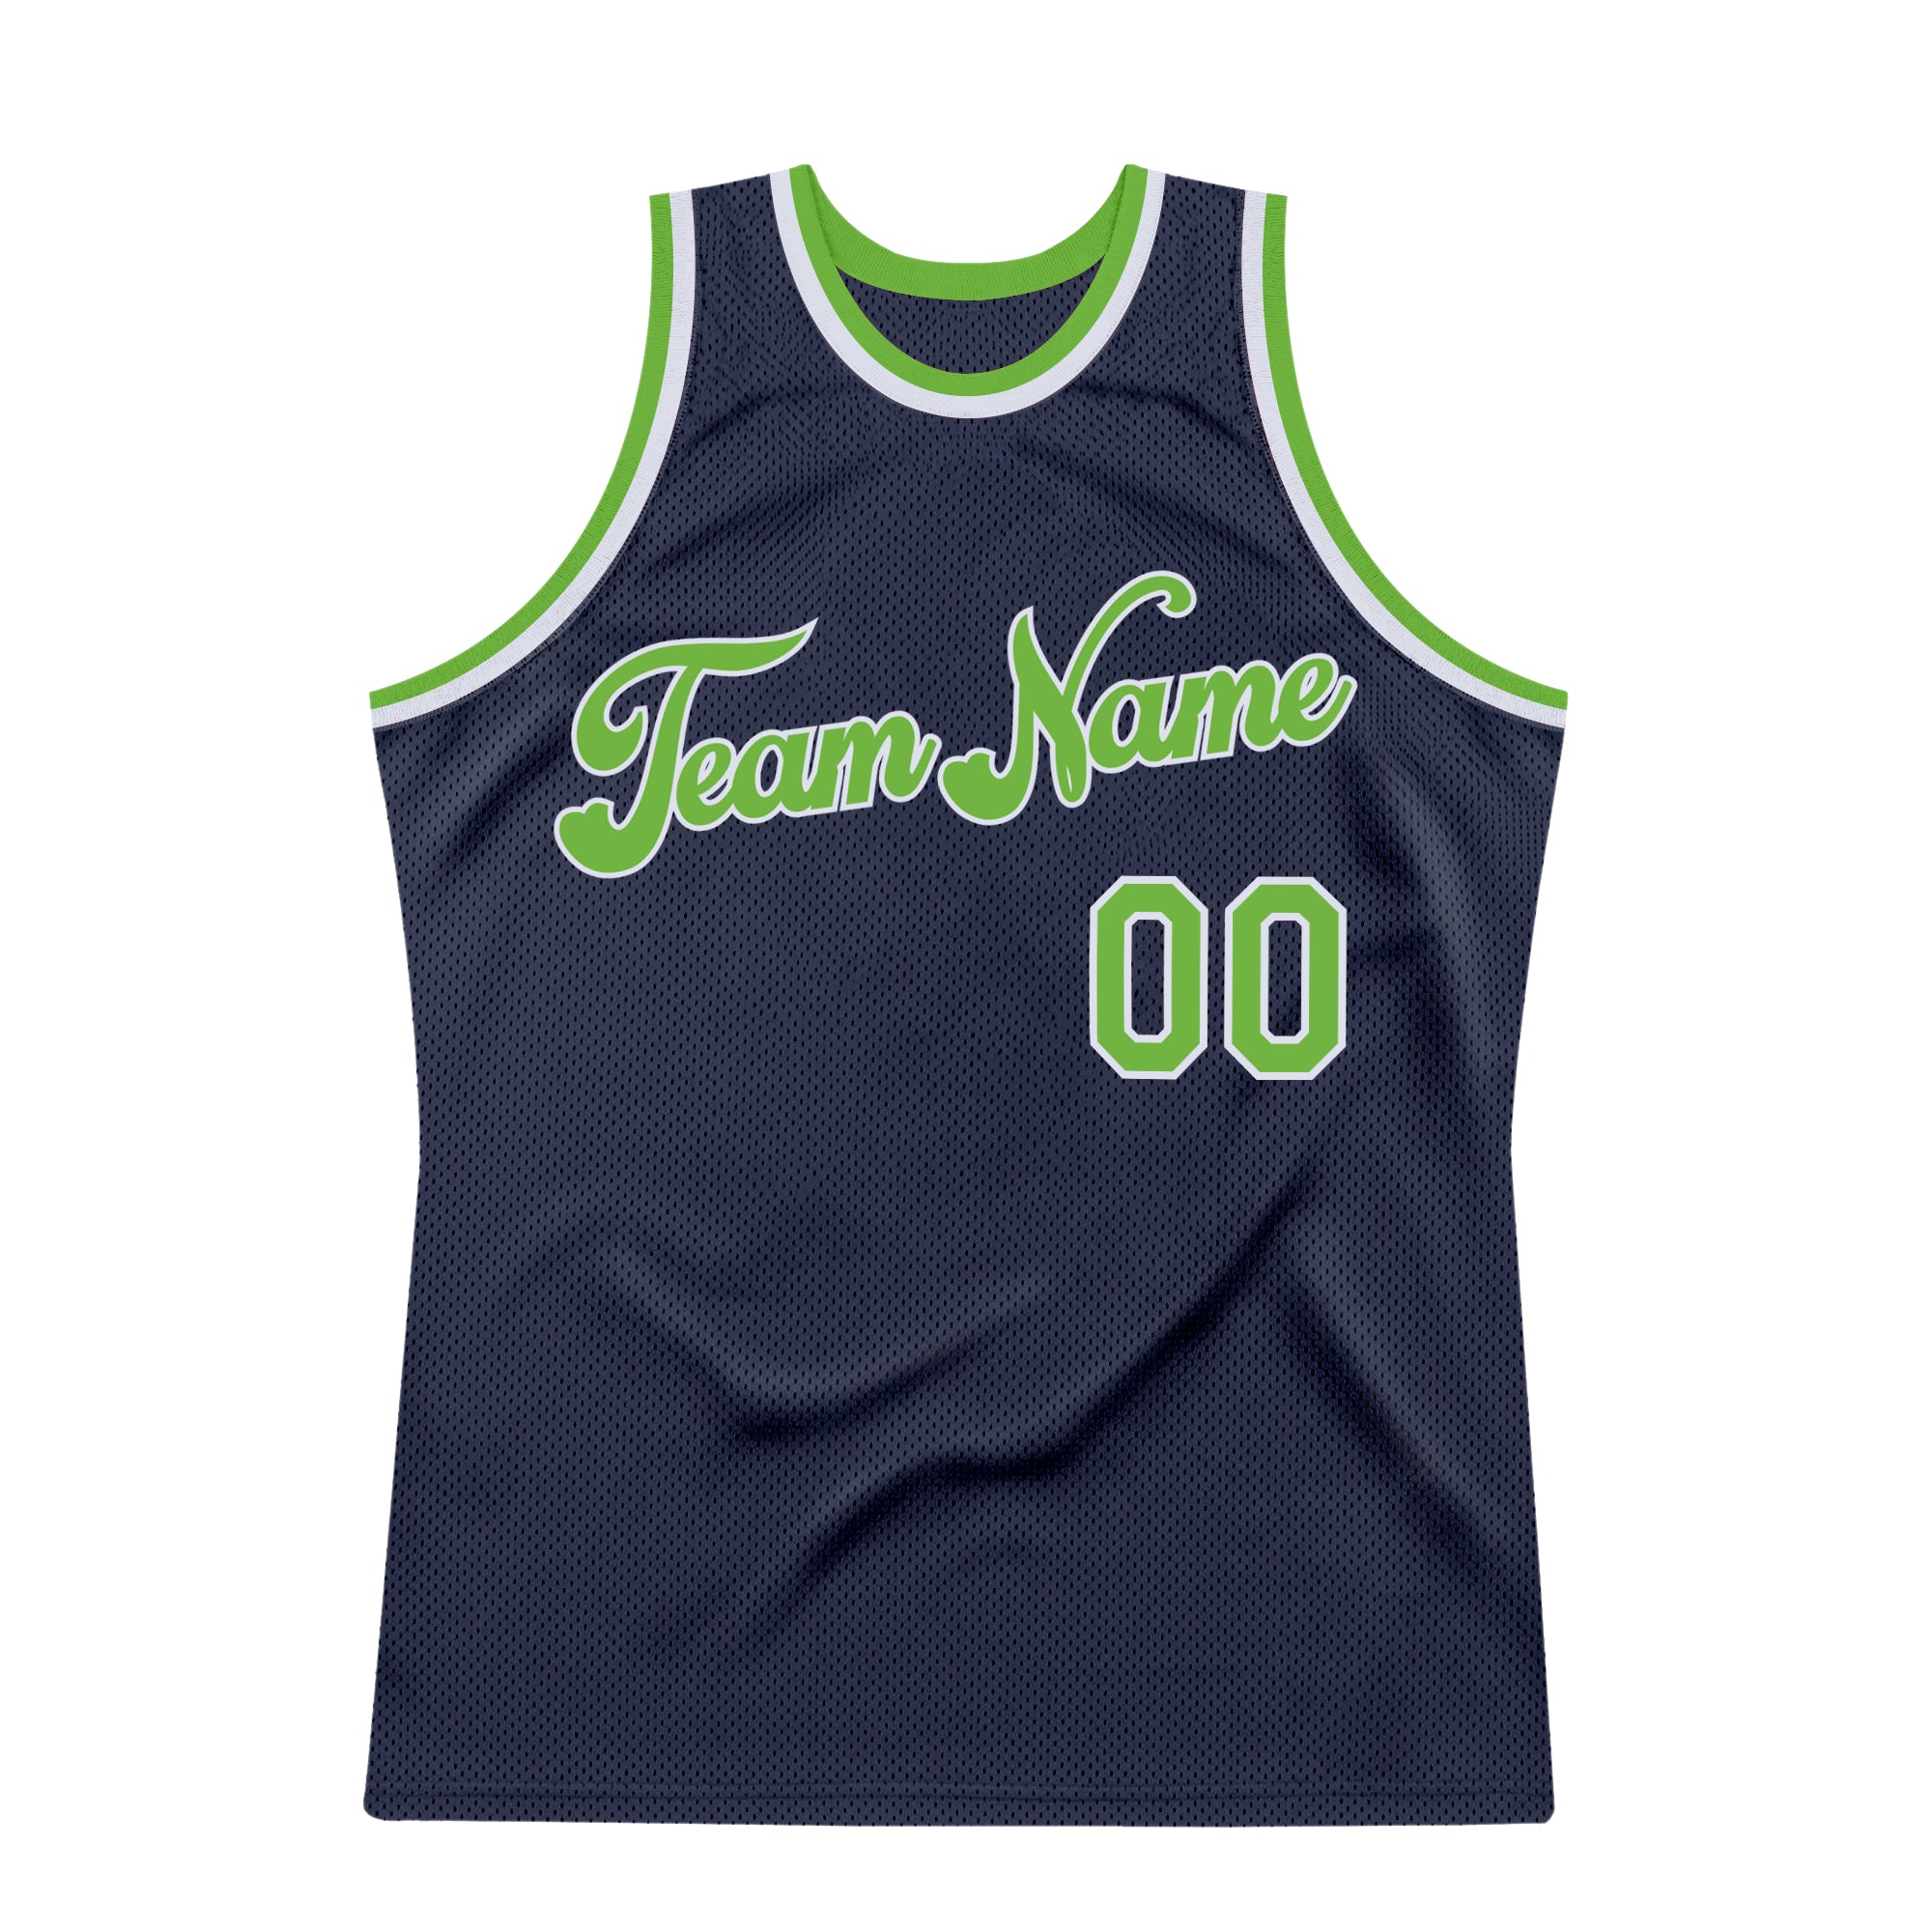 Design Team Basketball White Navy Authentic Throwback Neon Green